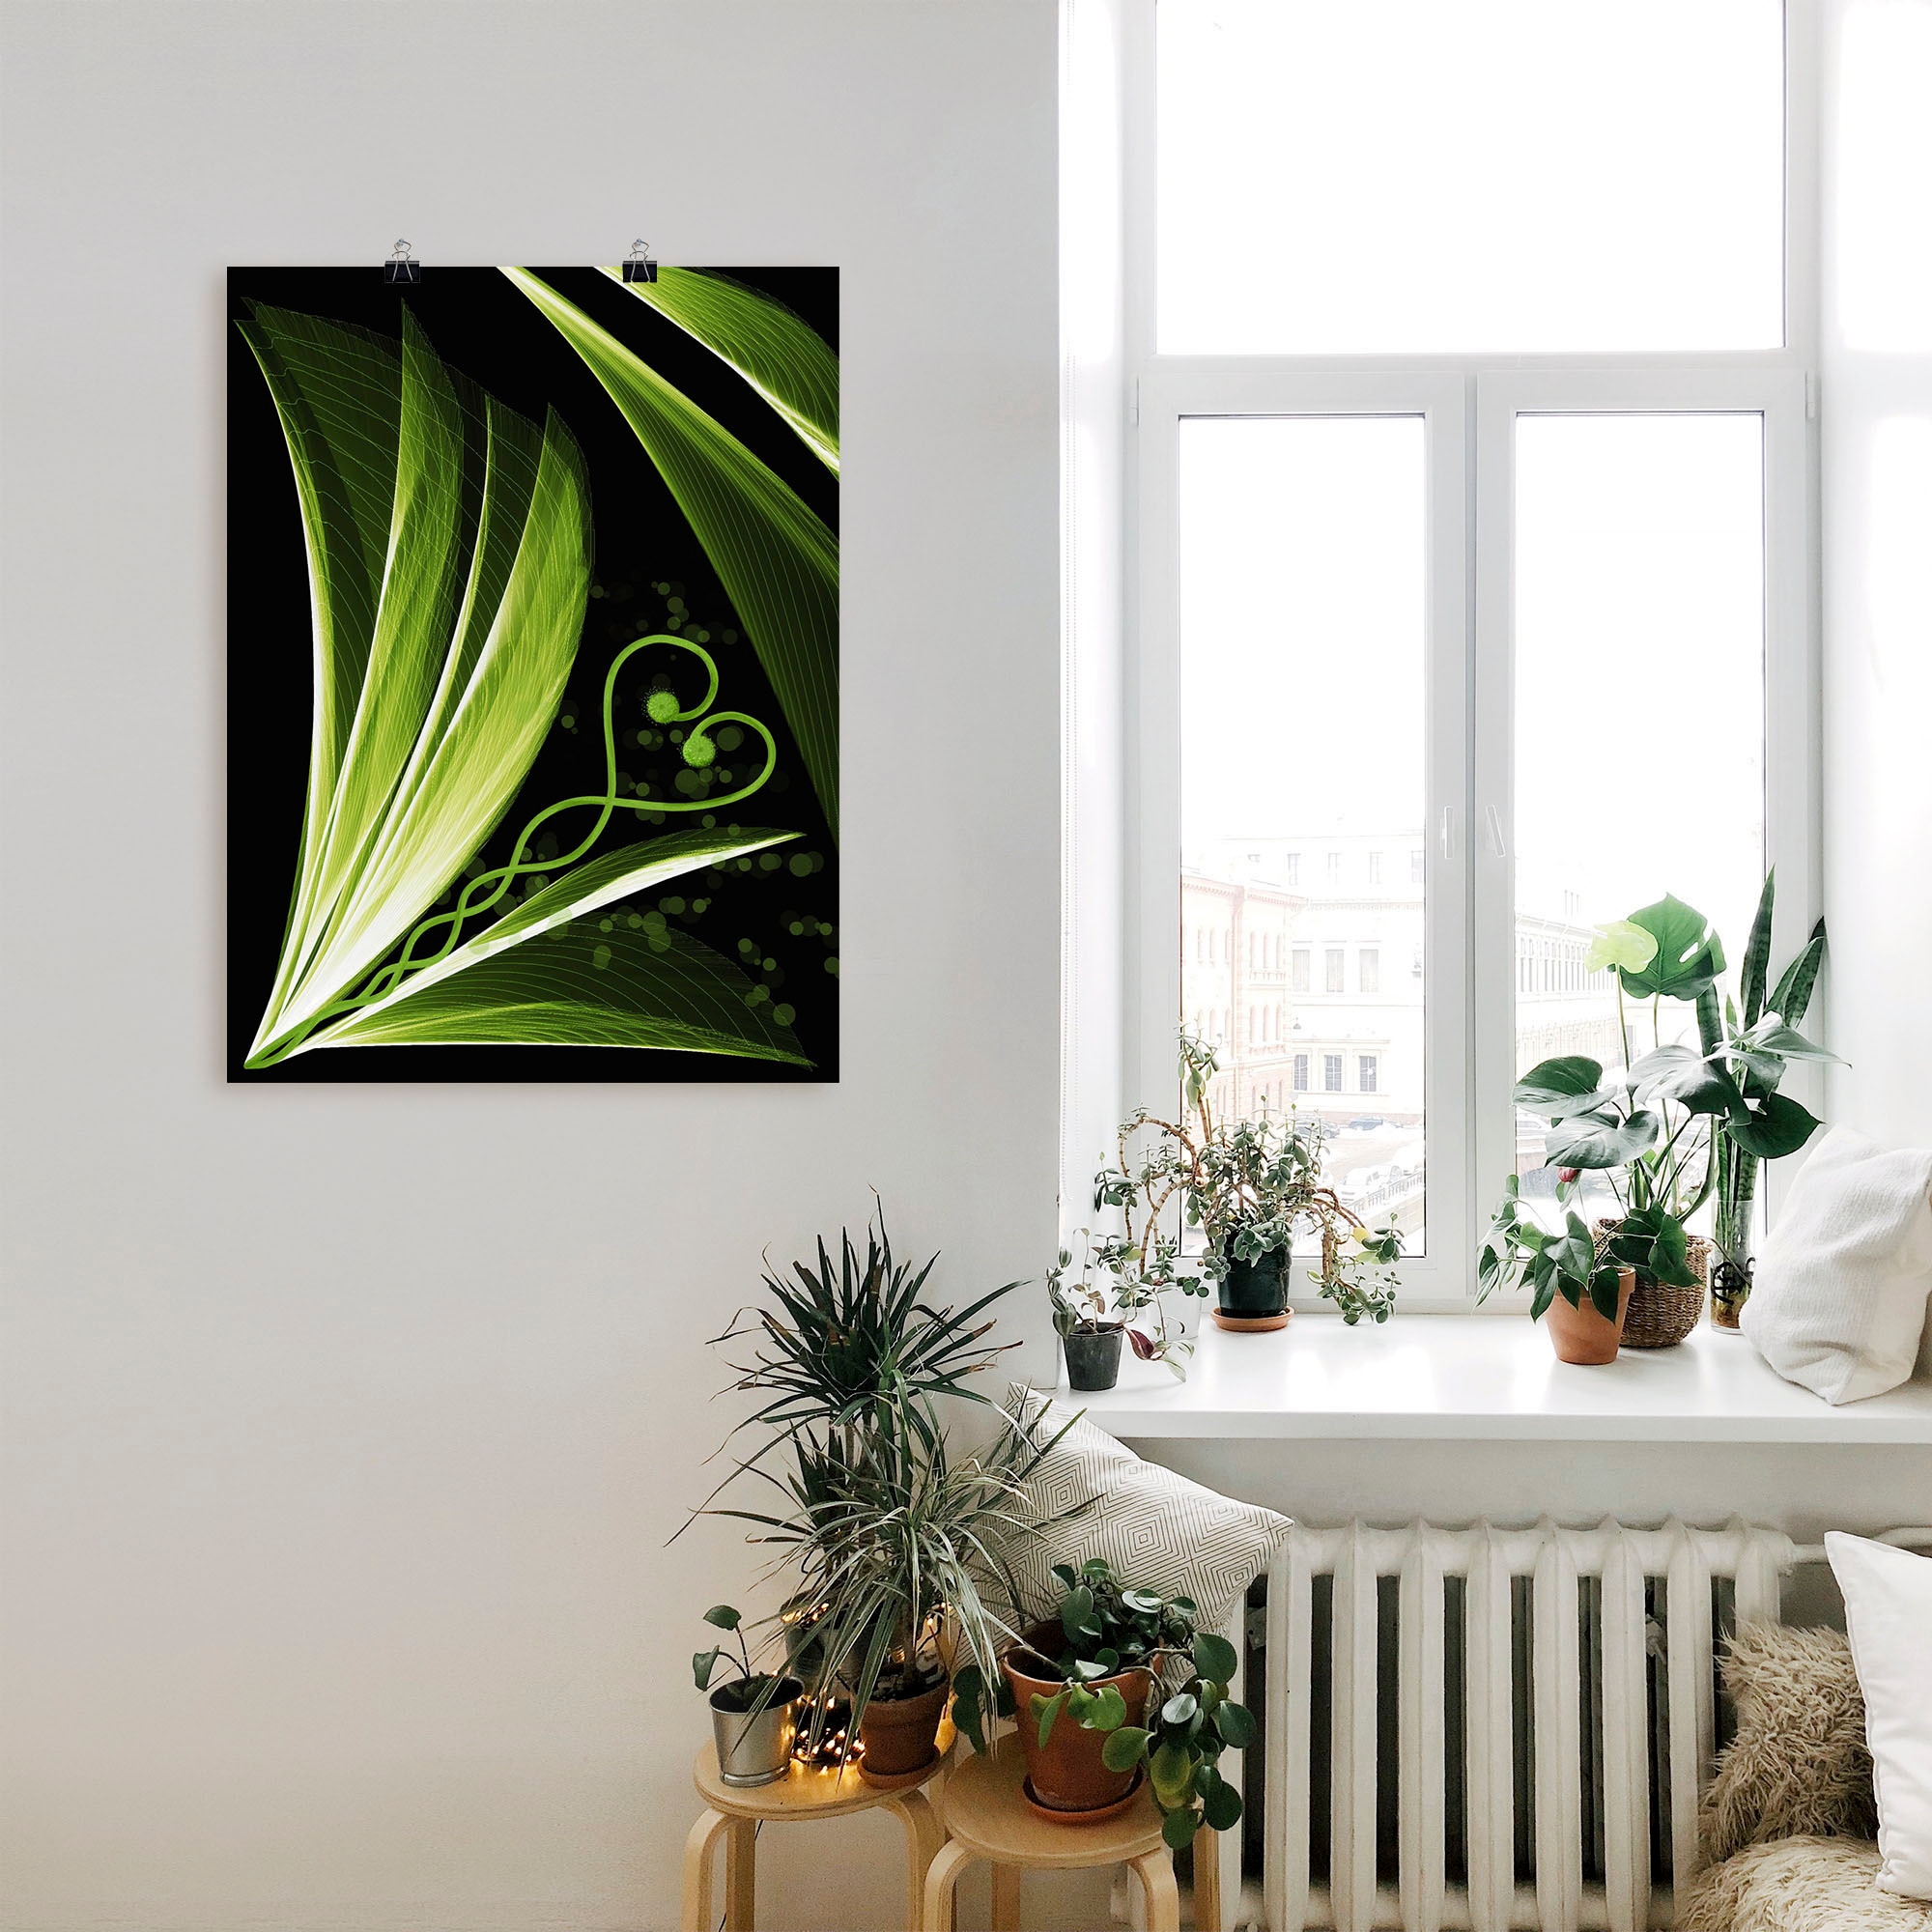 Artland Wandbild kaufen Leinwandbild, als »Grünes Poster bequem (1 Grössen Alubild, Herzblatt Bilder, dekorativ«, Spa Wandaufkleber in oder versch. St.)